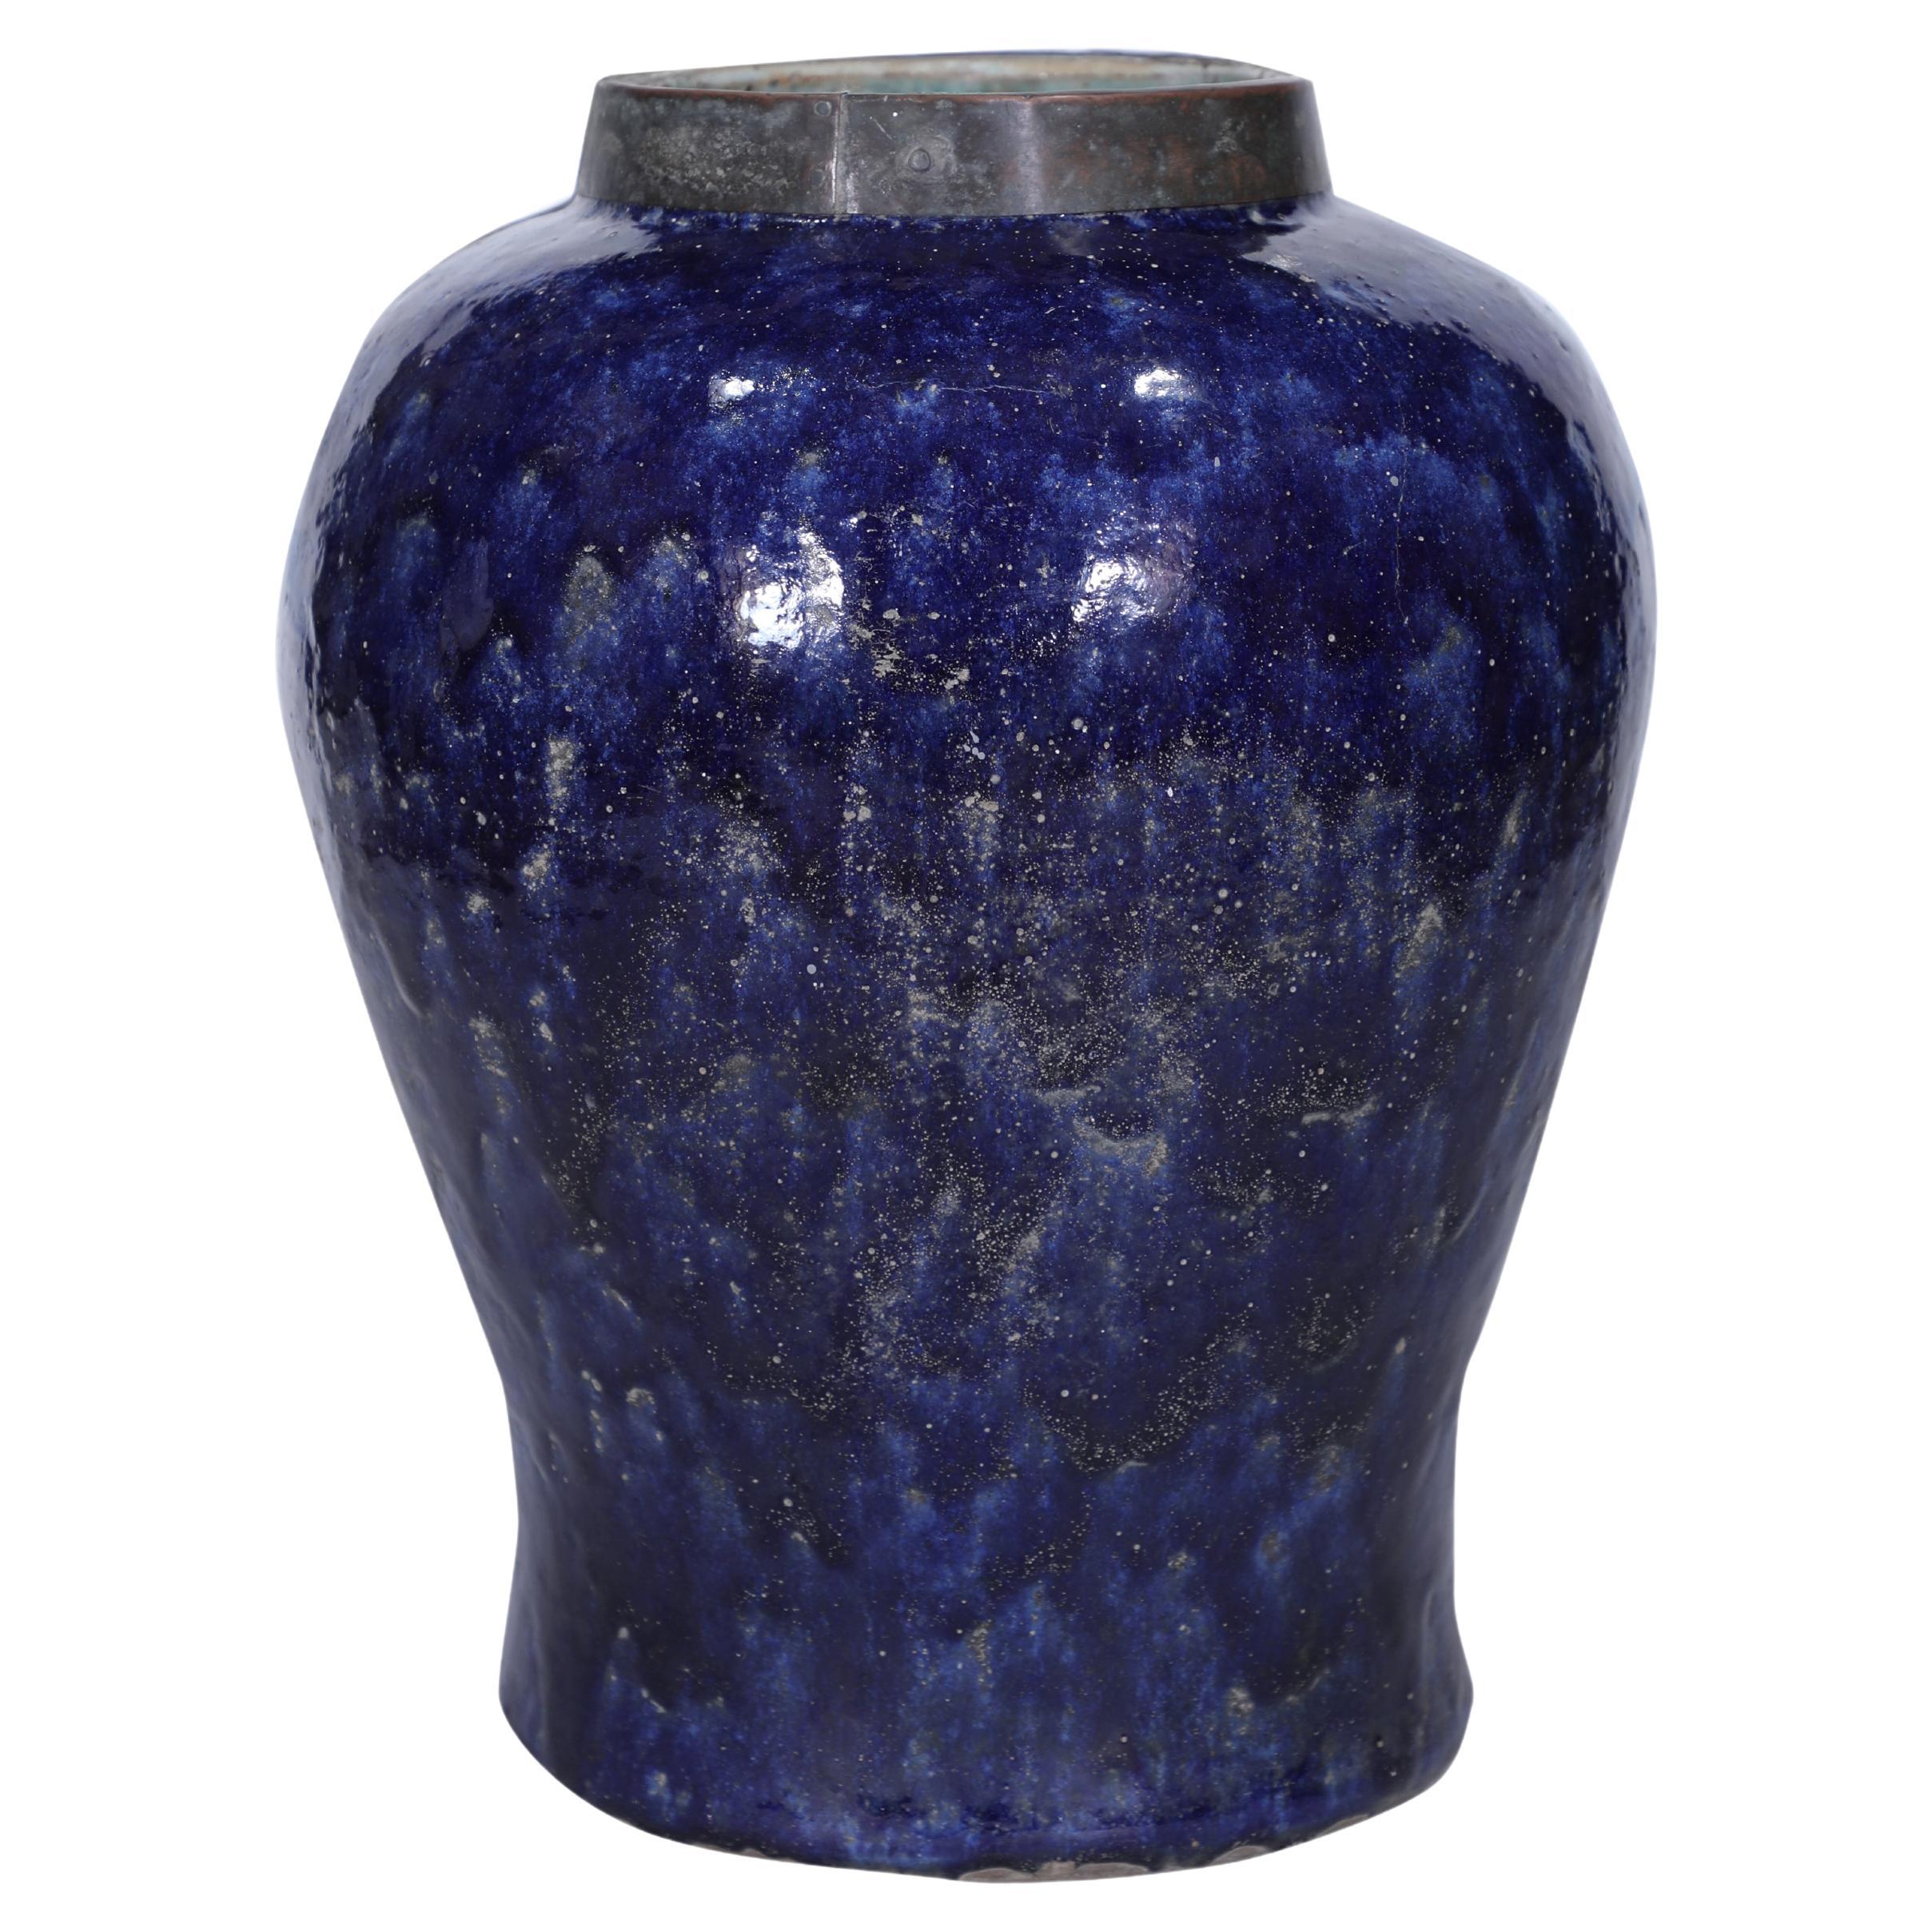 Grande urne ou jardinière en céramique bleu cobalt